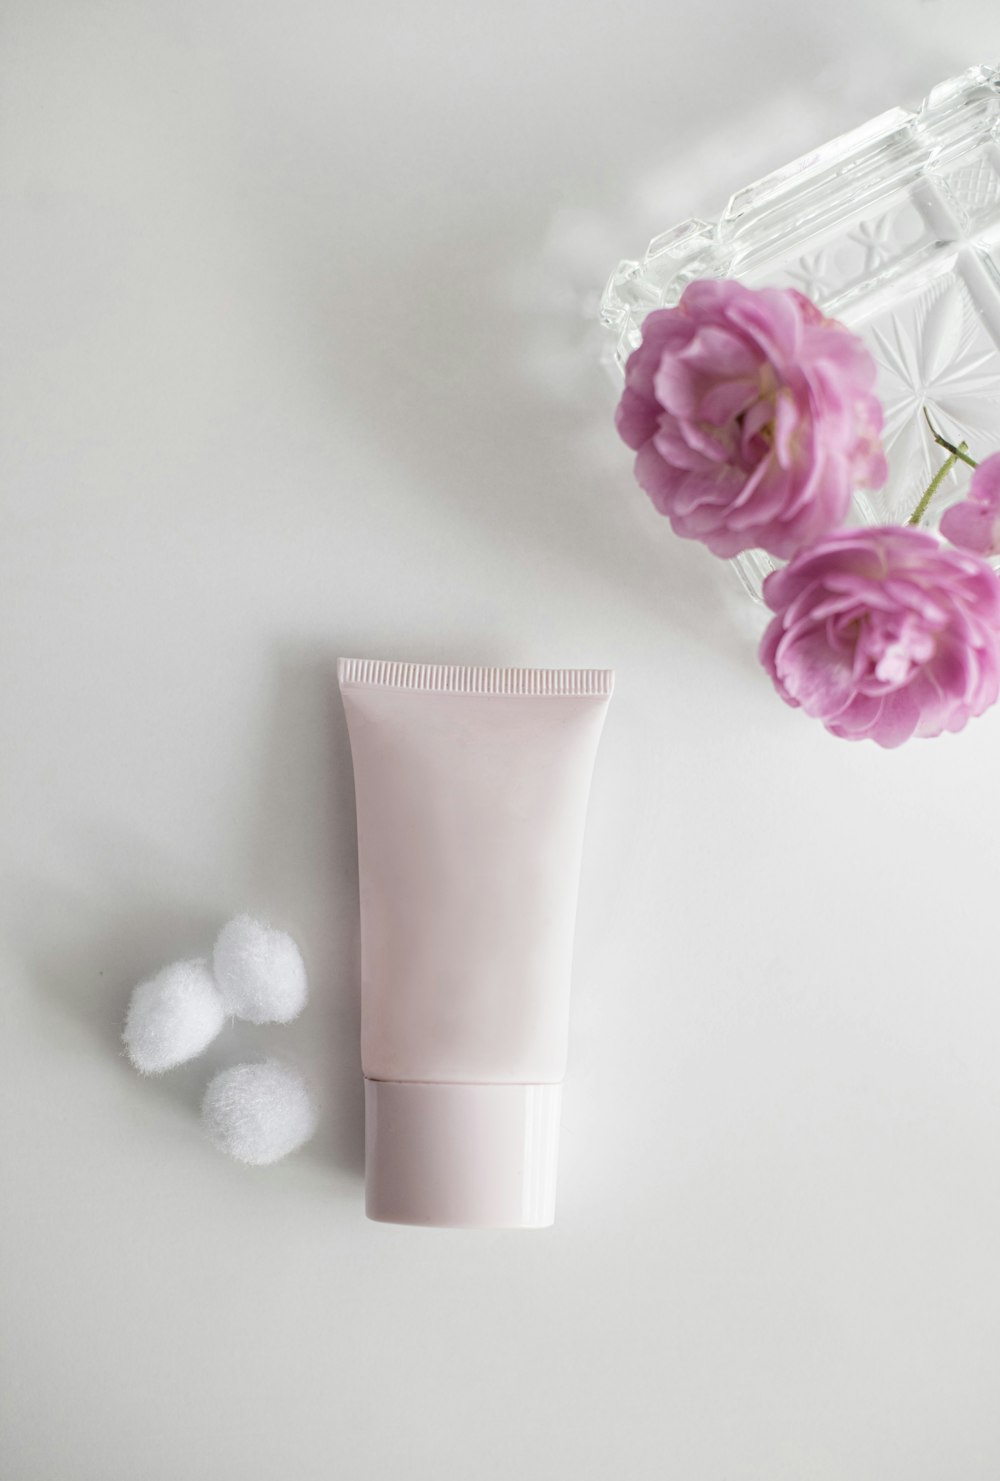 Un tubo de crema junto a una flor rosa